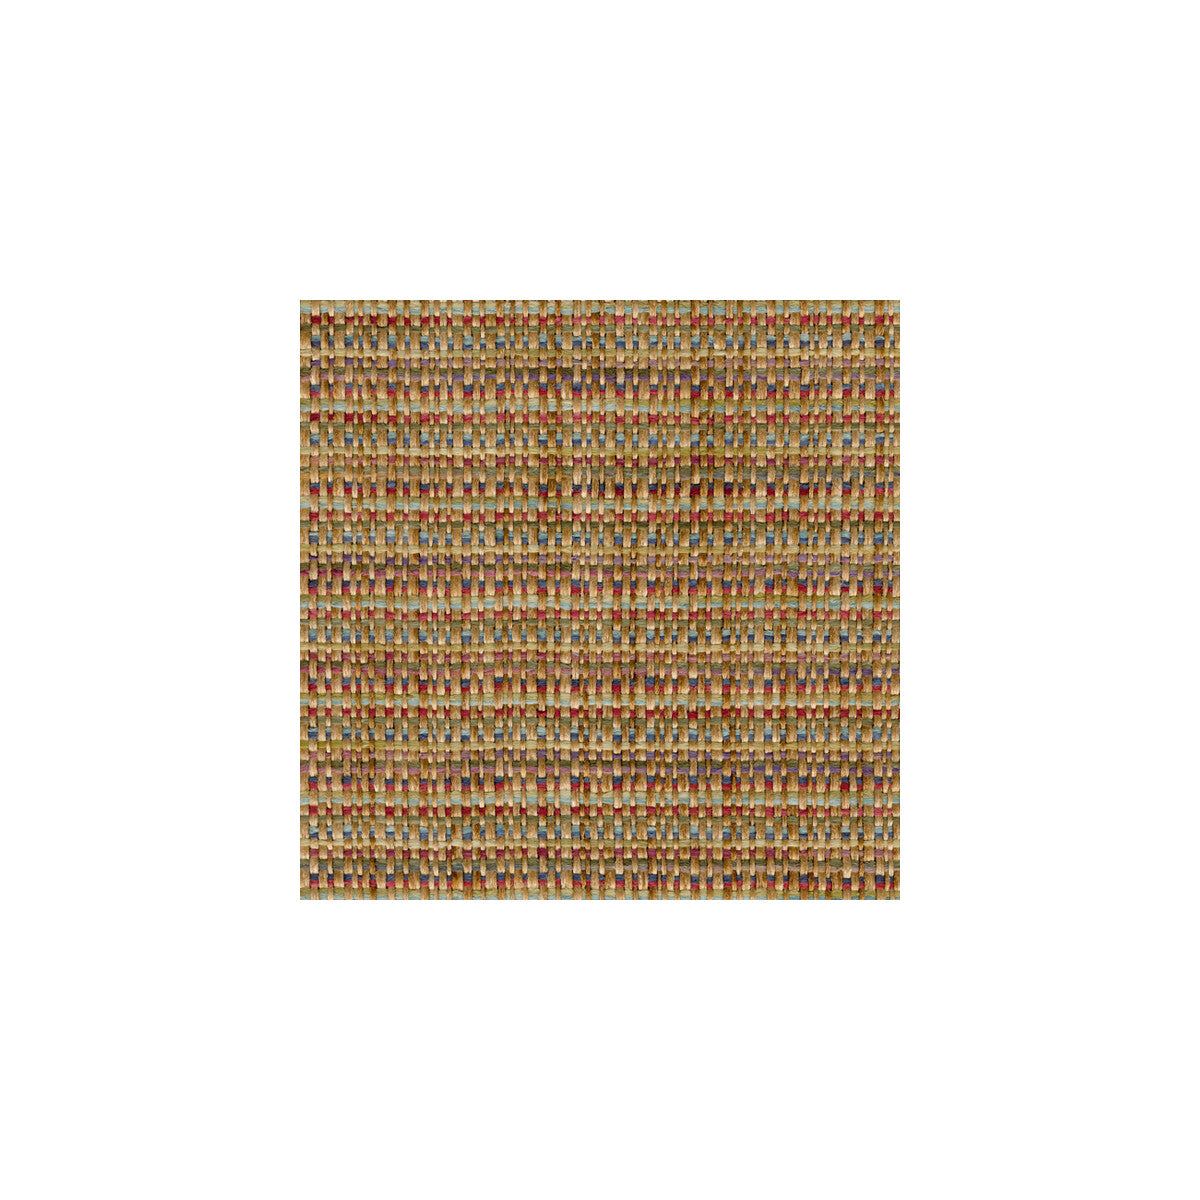 Kravet Smart fabric in 31757-914 color - pattern 31757.914.0 - by Kravet Smart